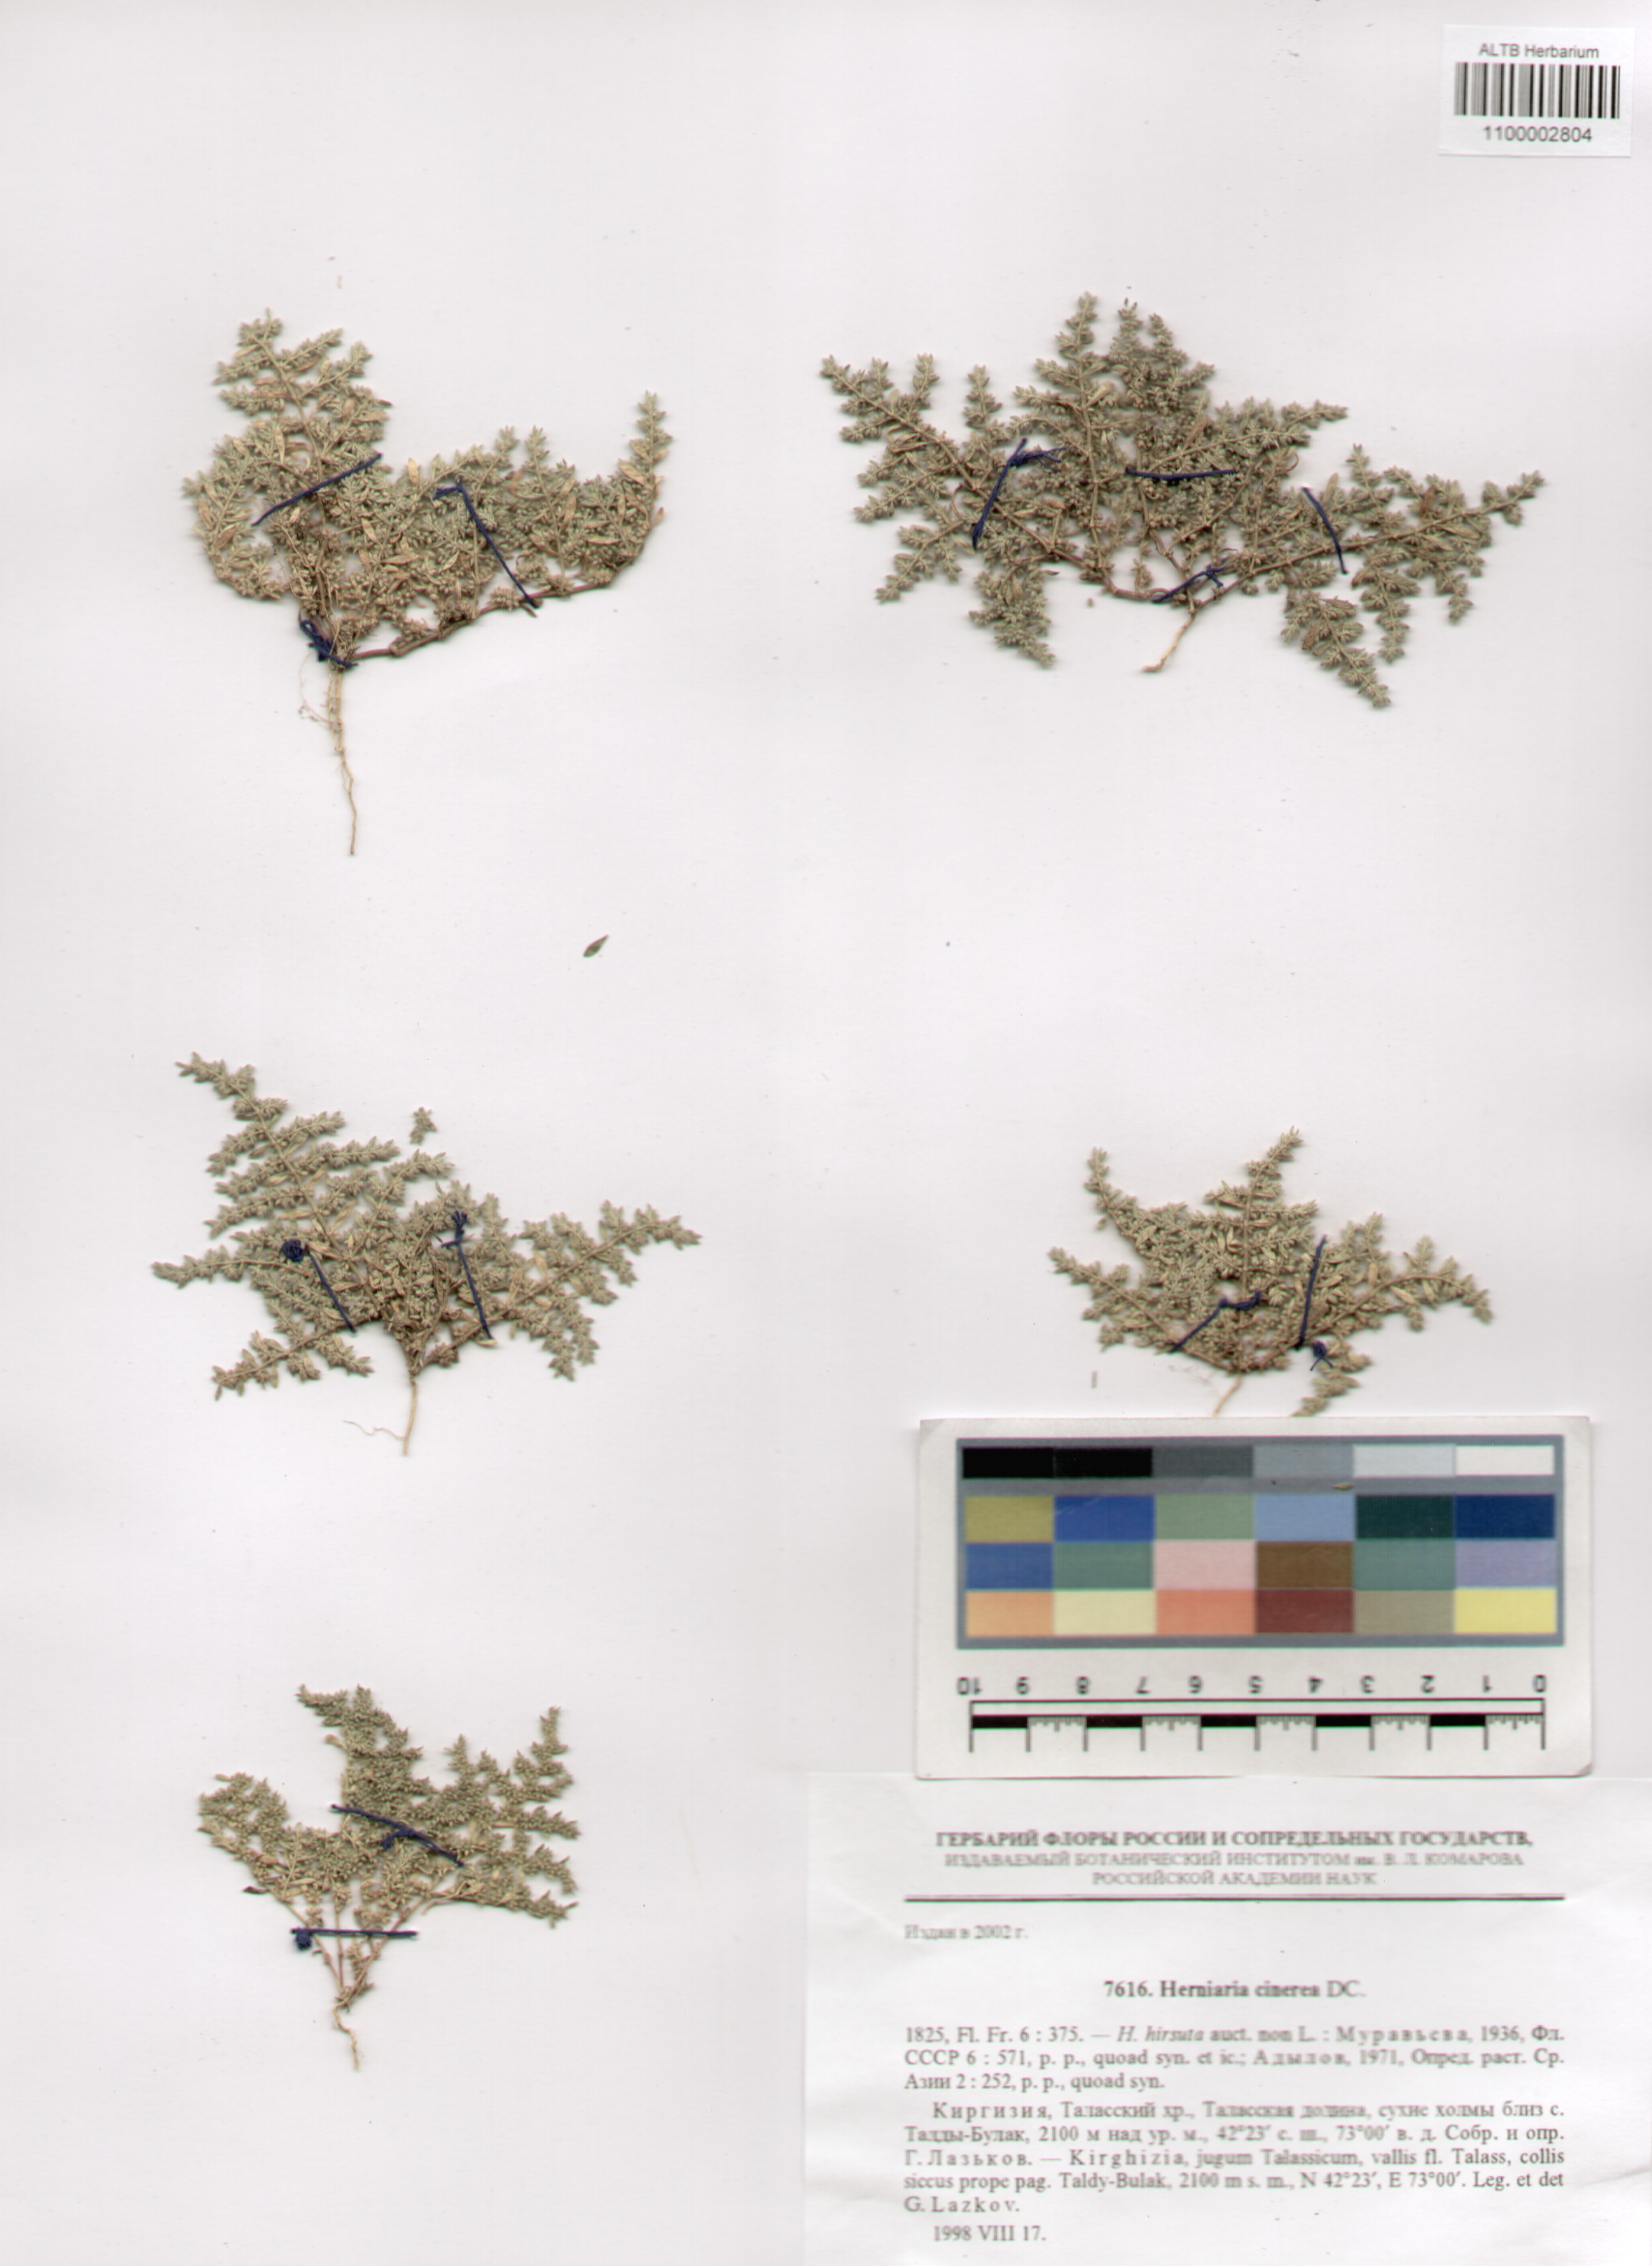 Caryophyllaceae,Herniaria cinerea DC.